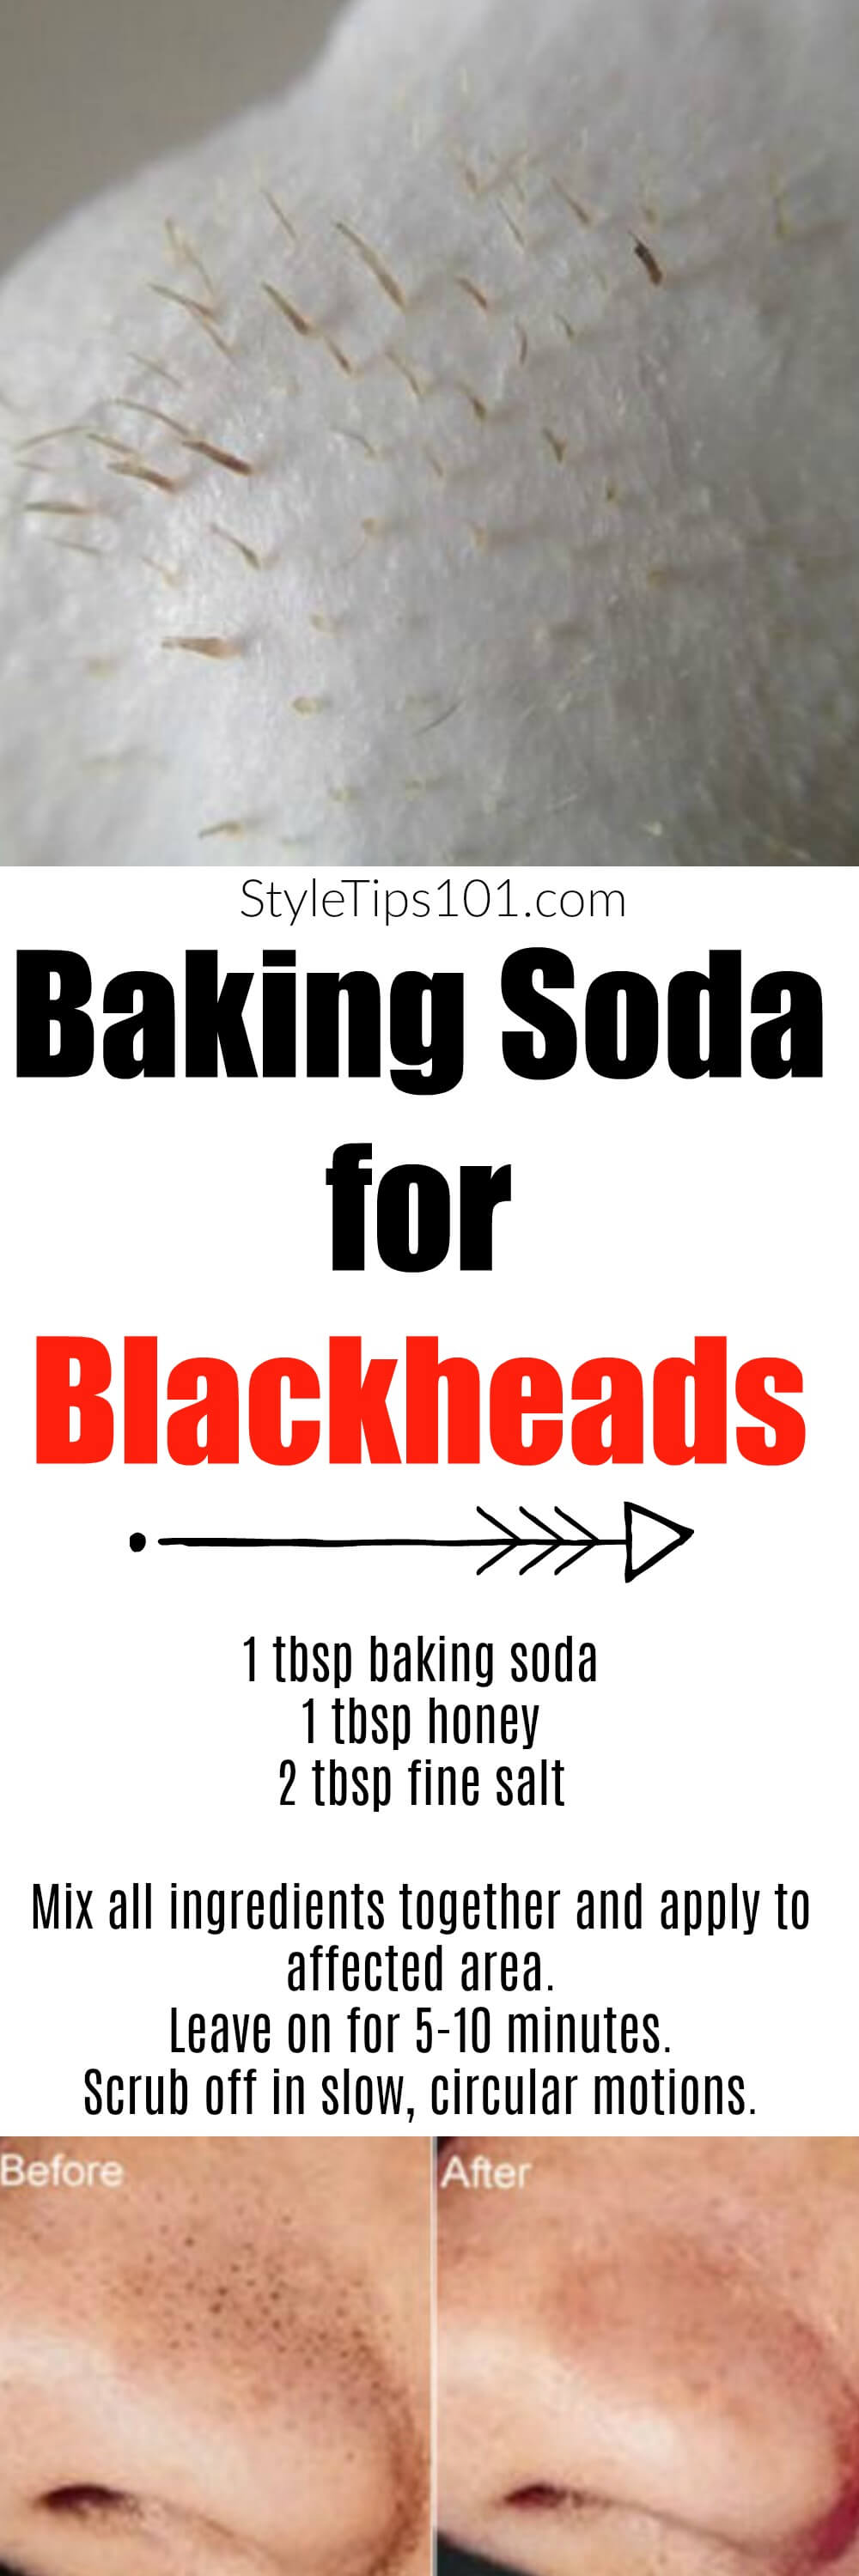 baking soda for blackheads reviews